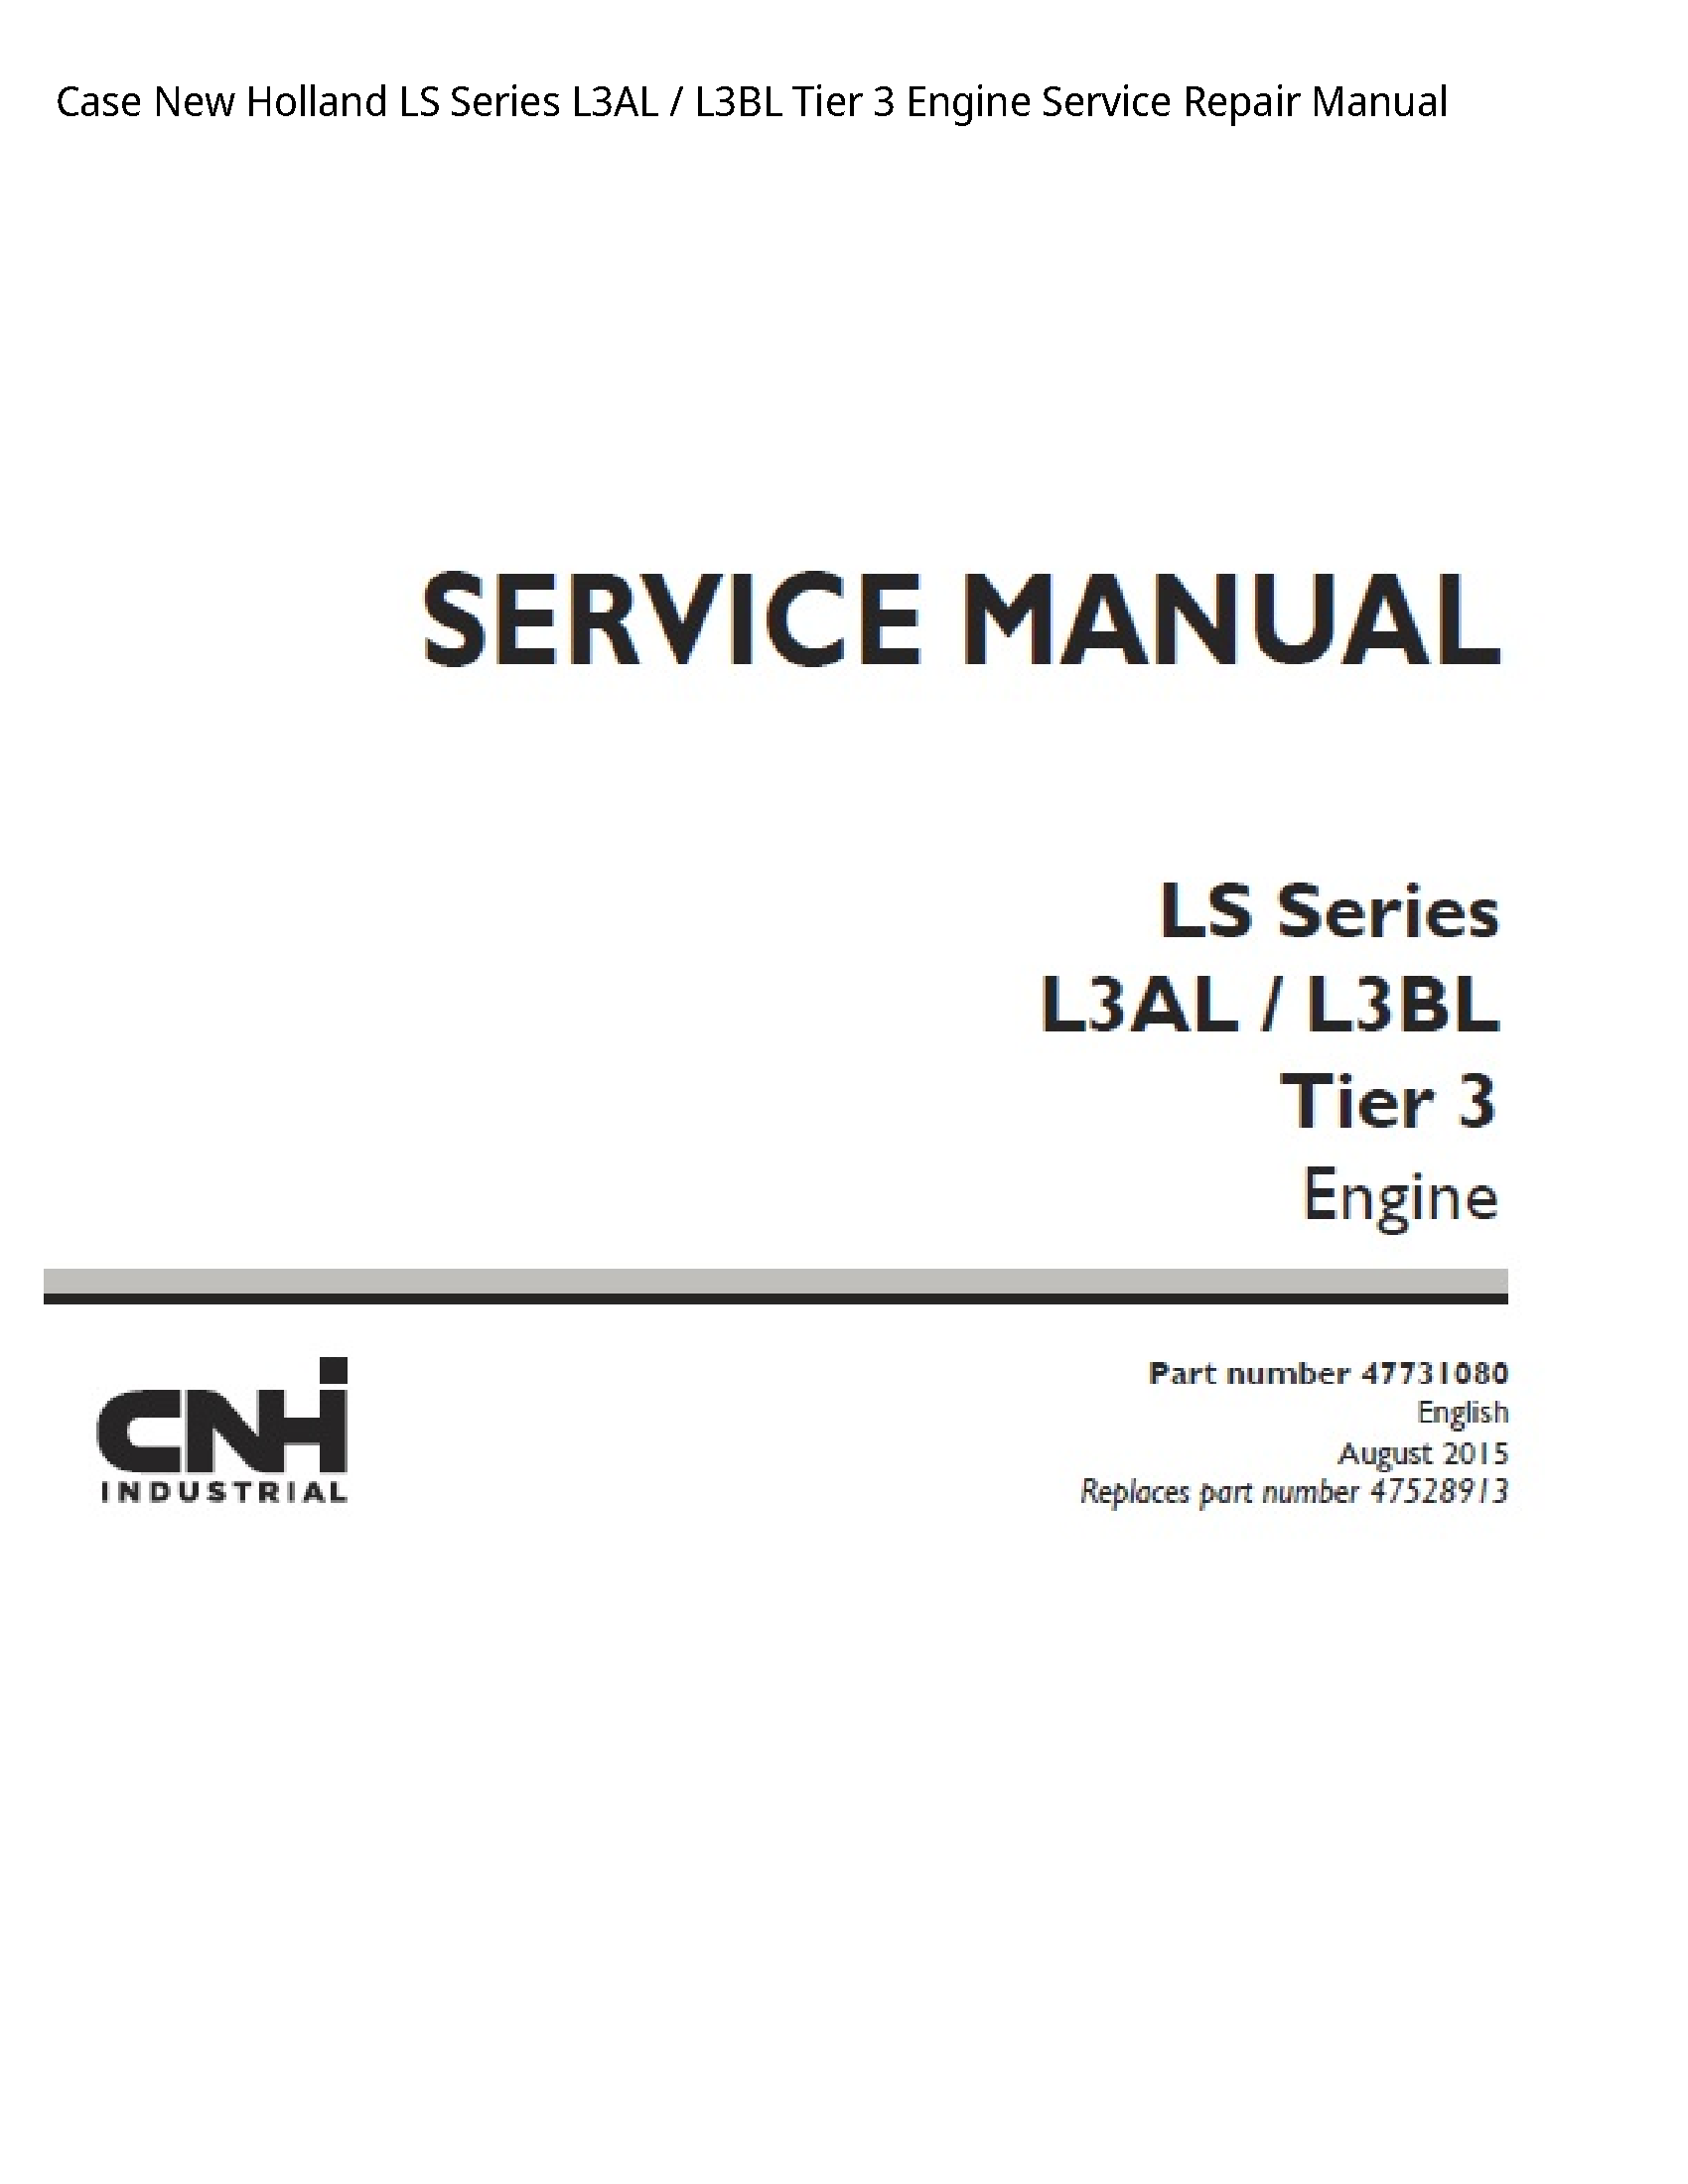 Case/Case IH L3AL New Holland LS Series Tier Engine manual